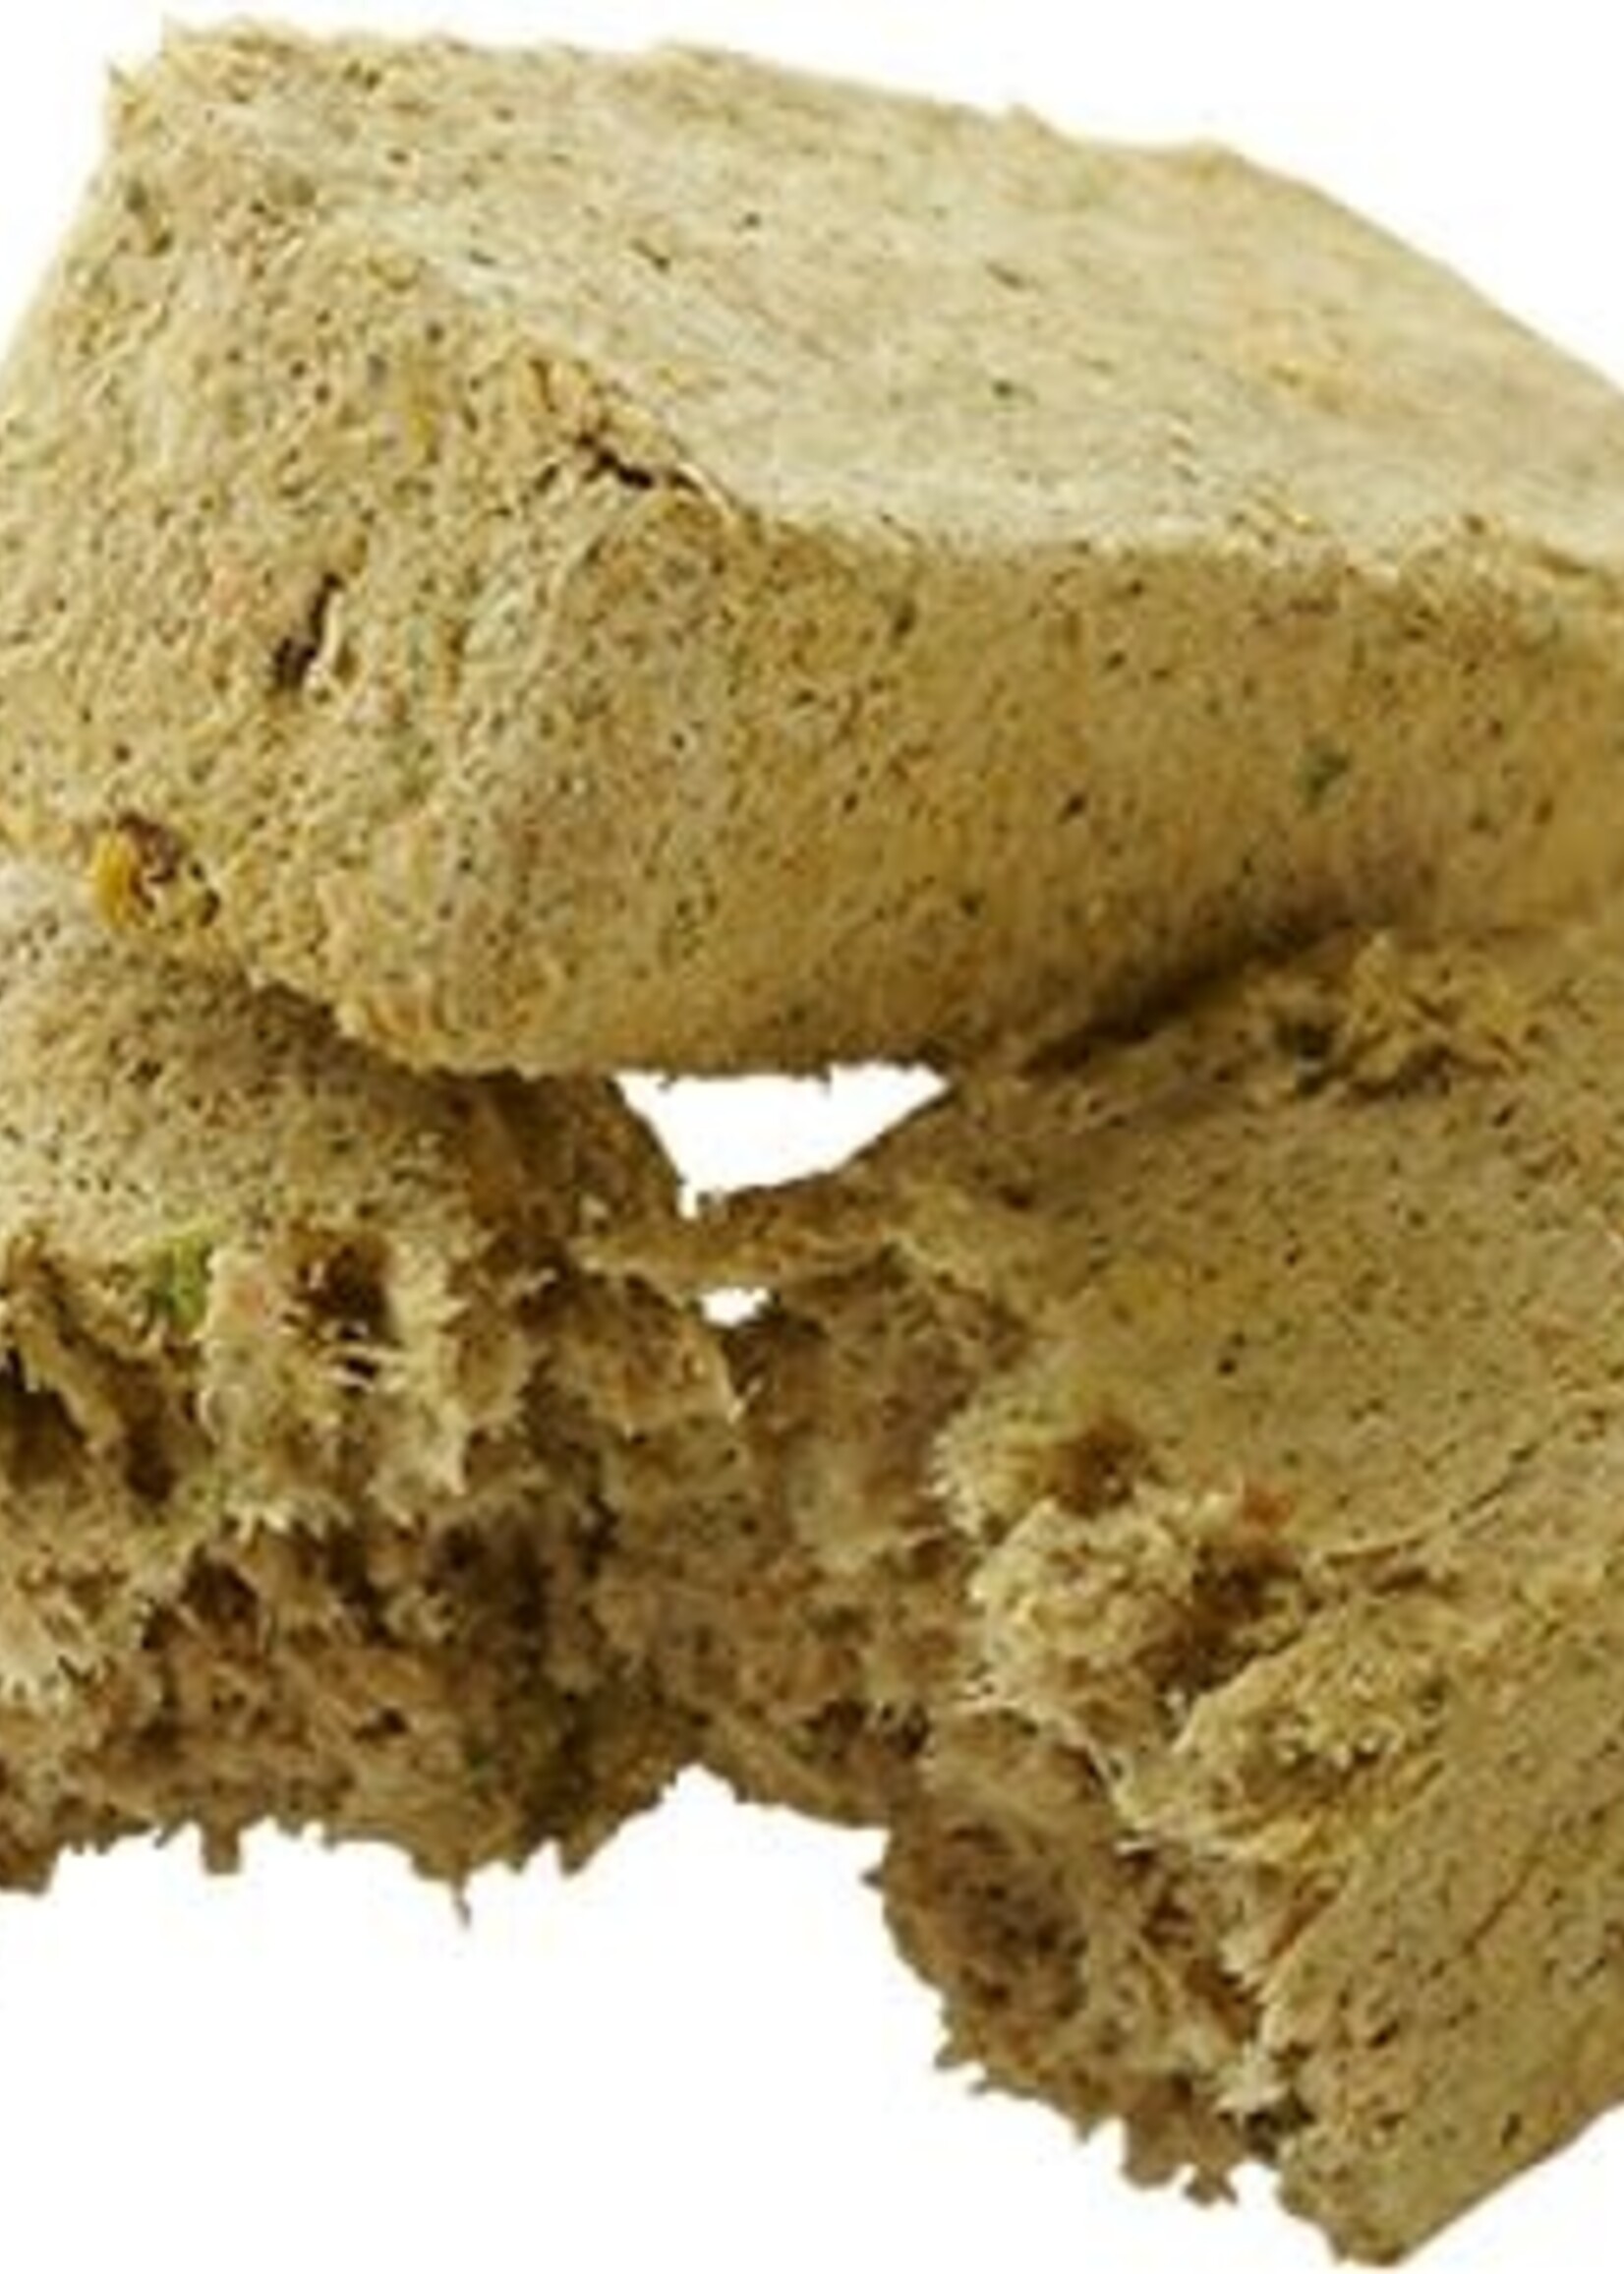 Primal Primal Freeze-Dried Nuggets Grain-Free Rabbit Formula Dog Food